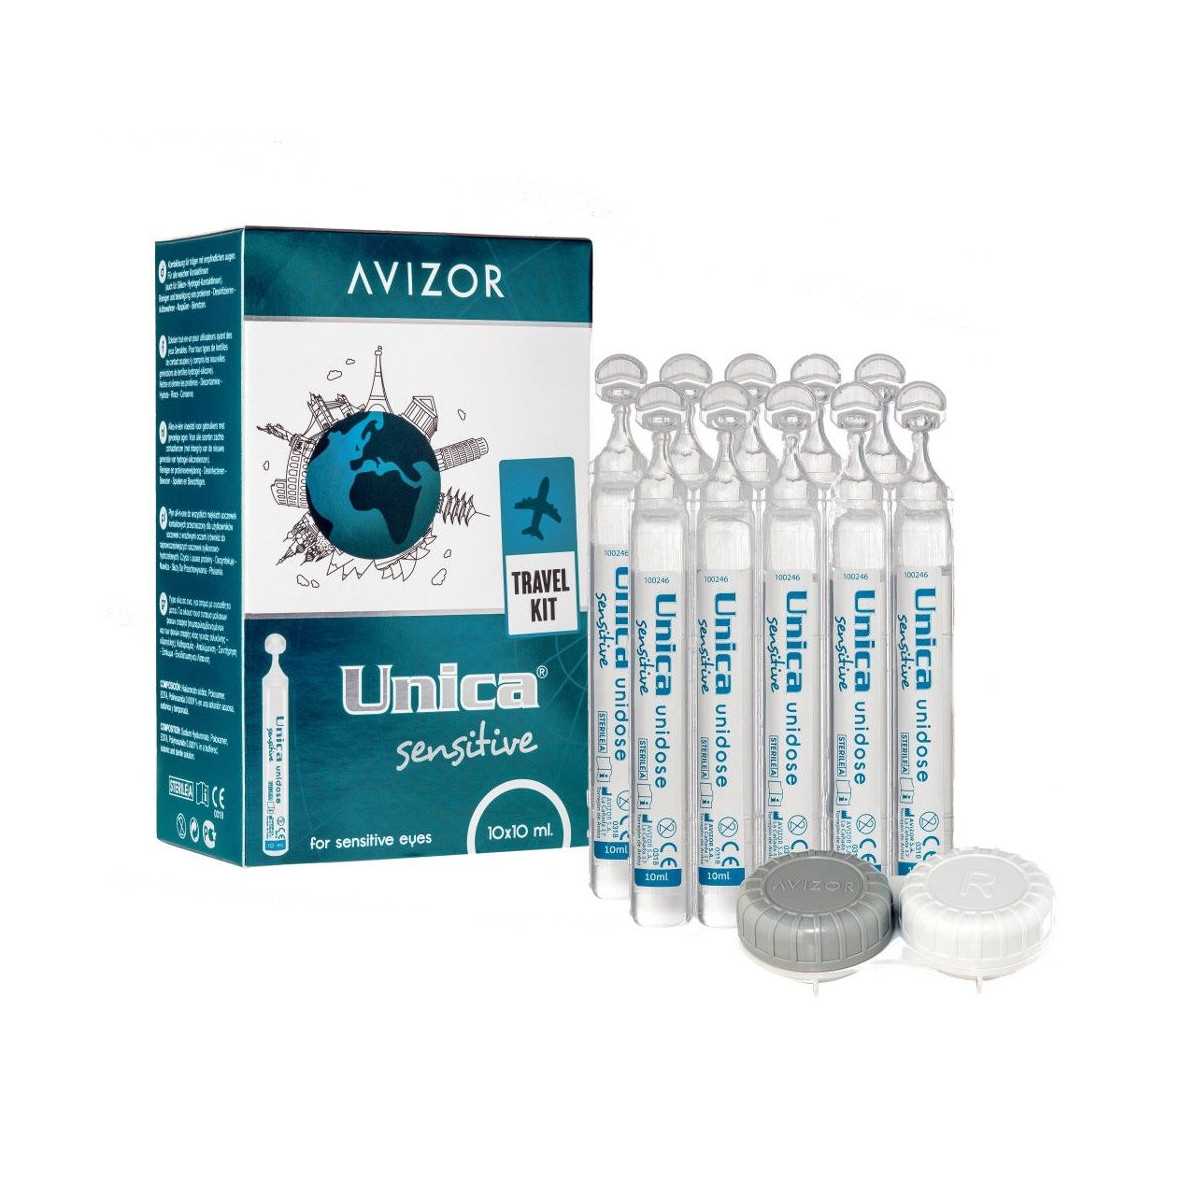 Unica Sensitive 10x10 ml. roztok na kontaktné šošovky - citlivé oči Avizor - 1